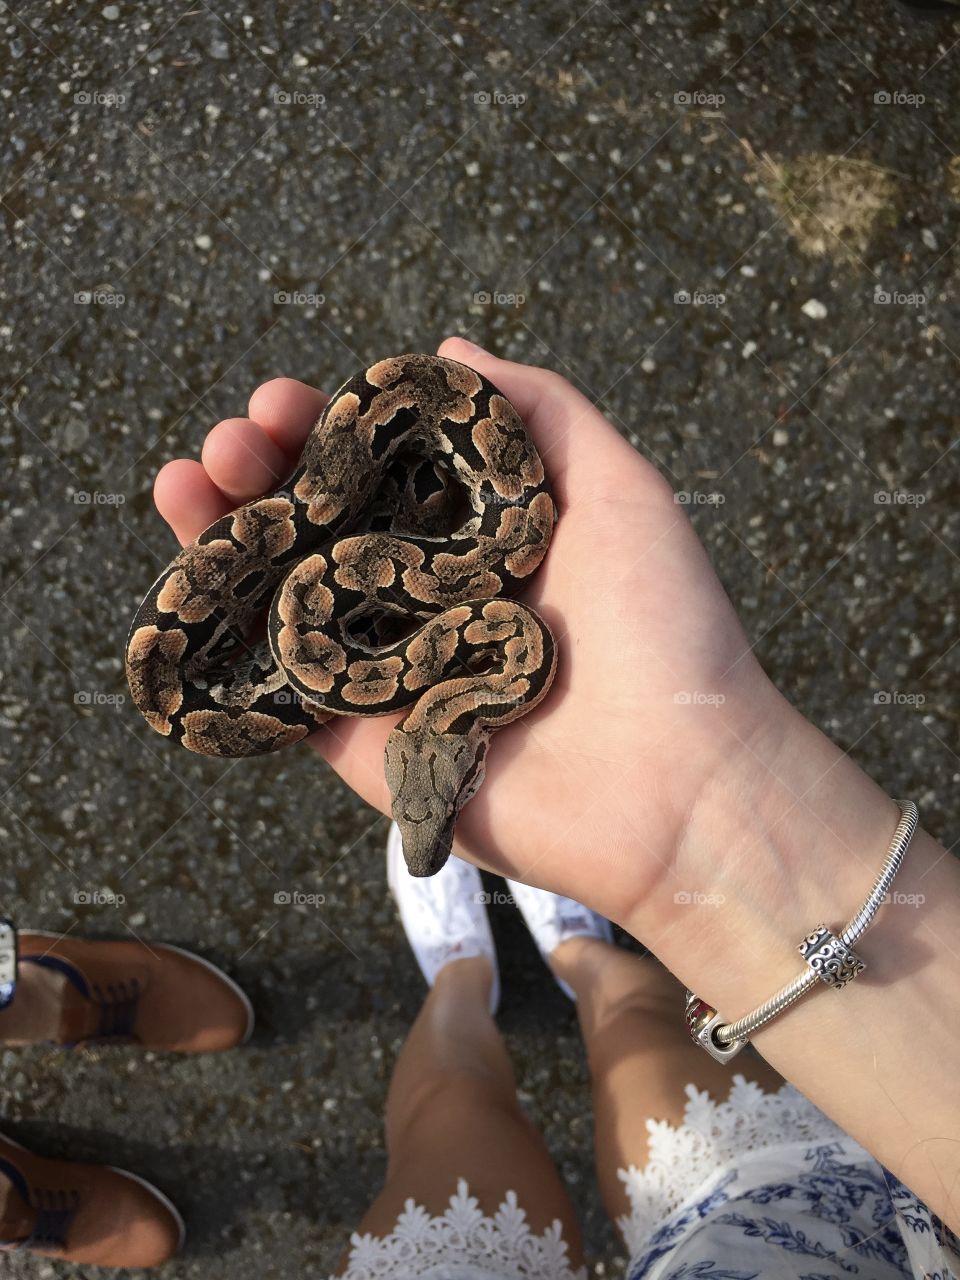 My snake friend
